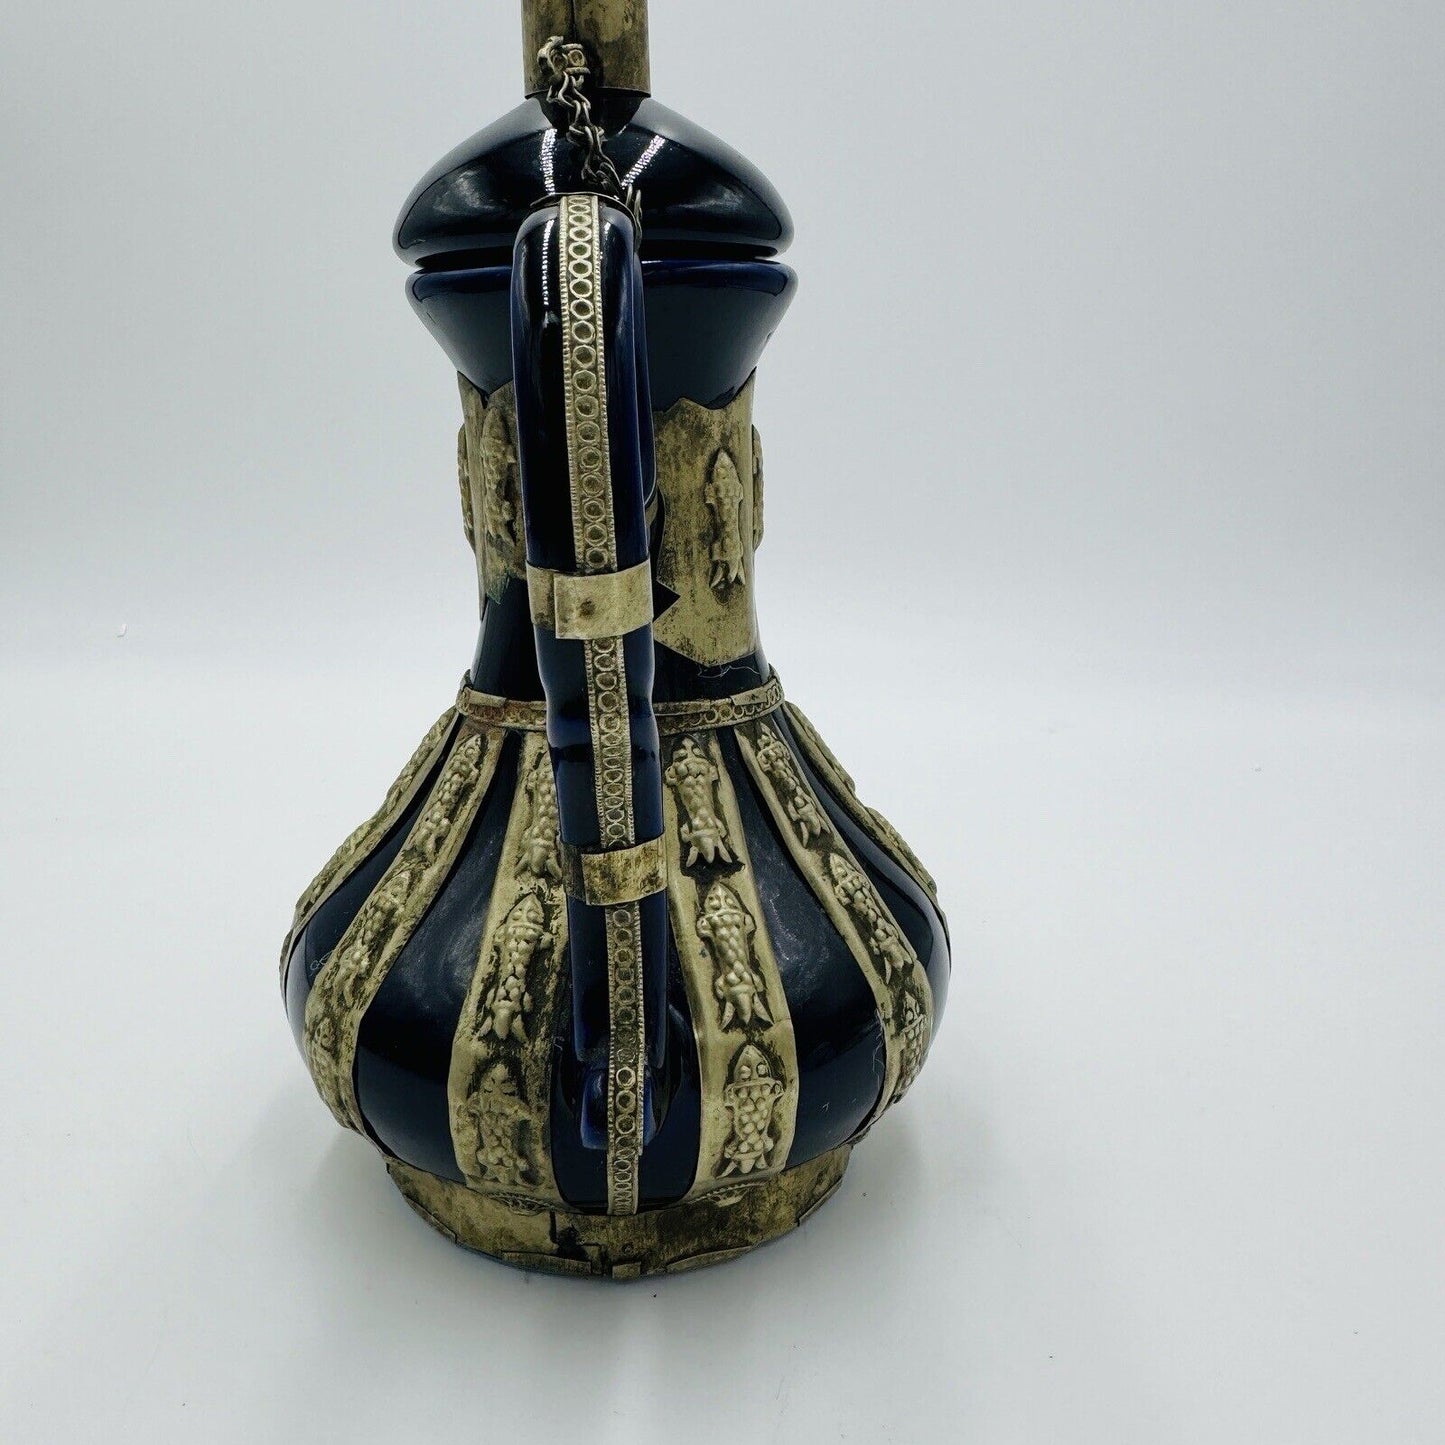 Antique Chinese Blue Cobalt Ornate Brass Design Teapot Porcelain